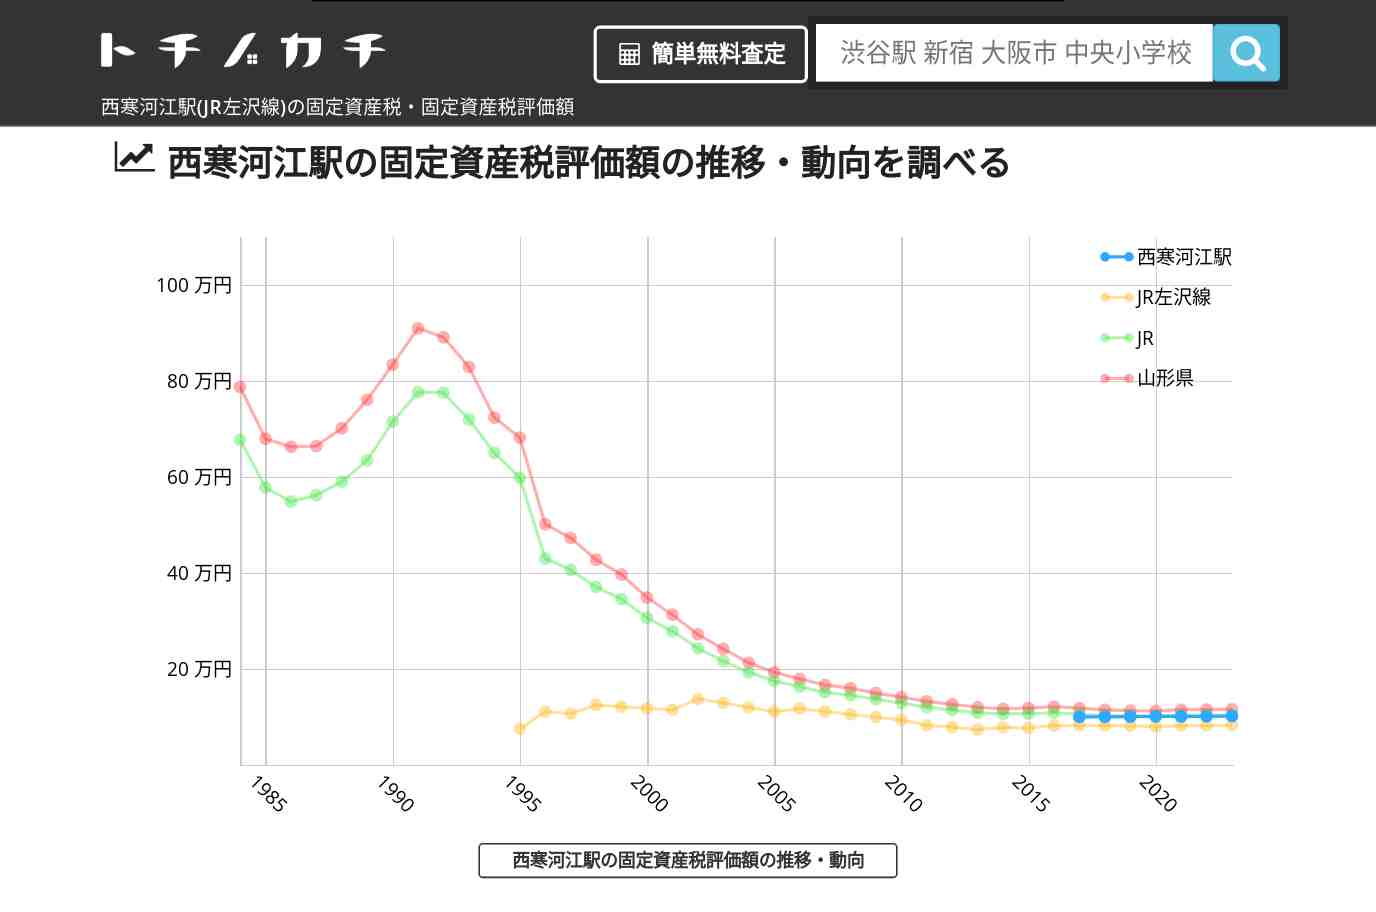 西寒河江駅(JR左沢線)の固定資産税・固定資産税評価額 | トチノカチ